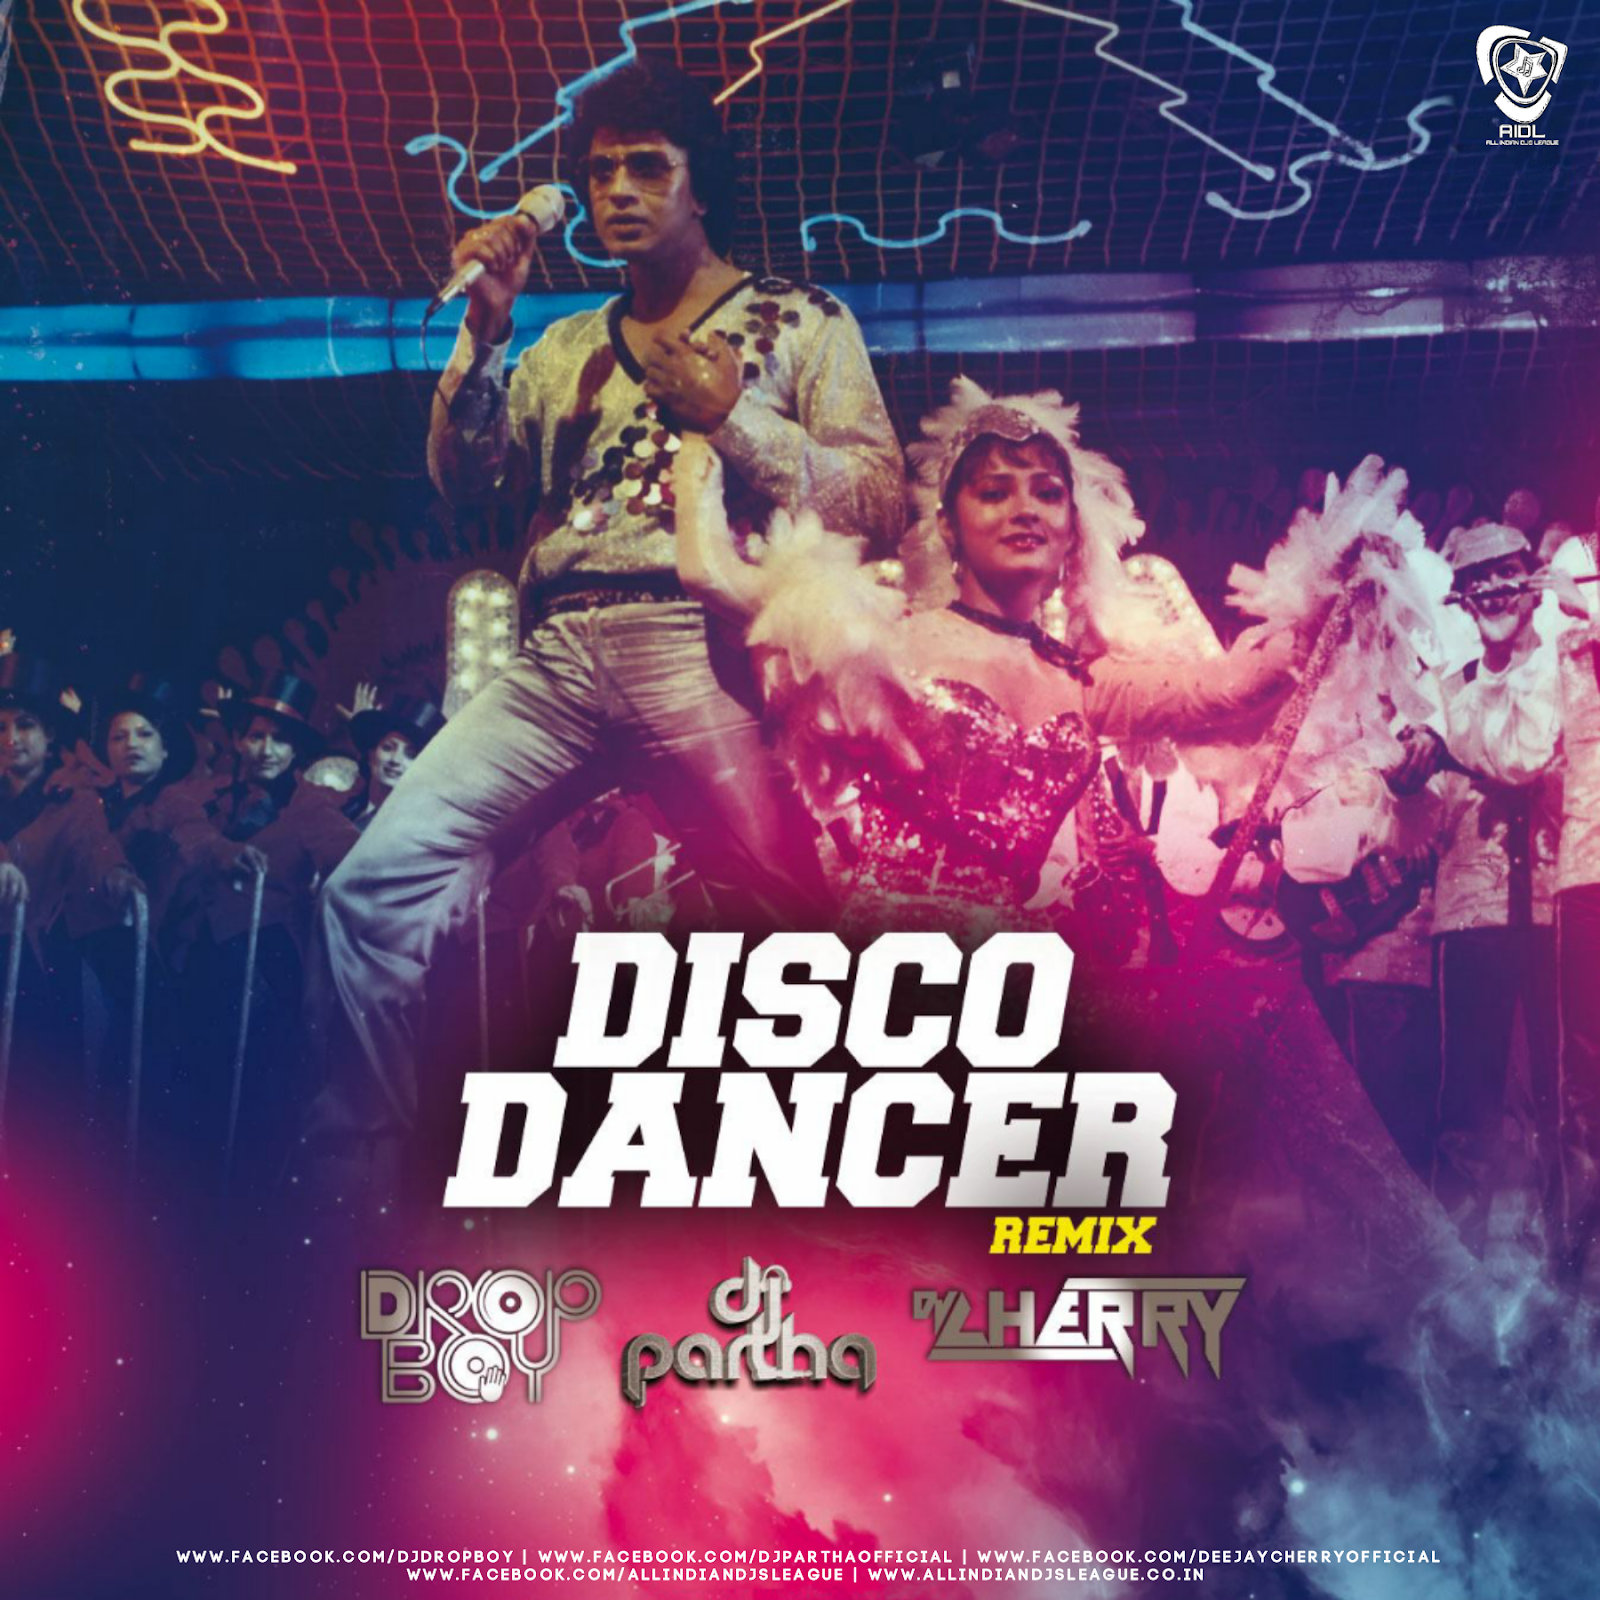 Dance remix mp3. Танцор диско. Диско денсер. «Танцор диско» / Disco Dancer. Танцовщица диско.